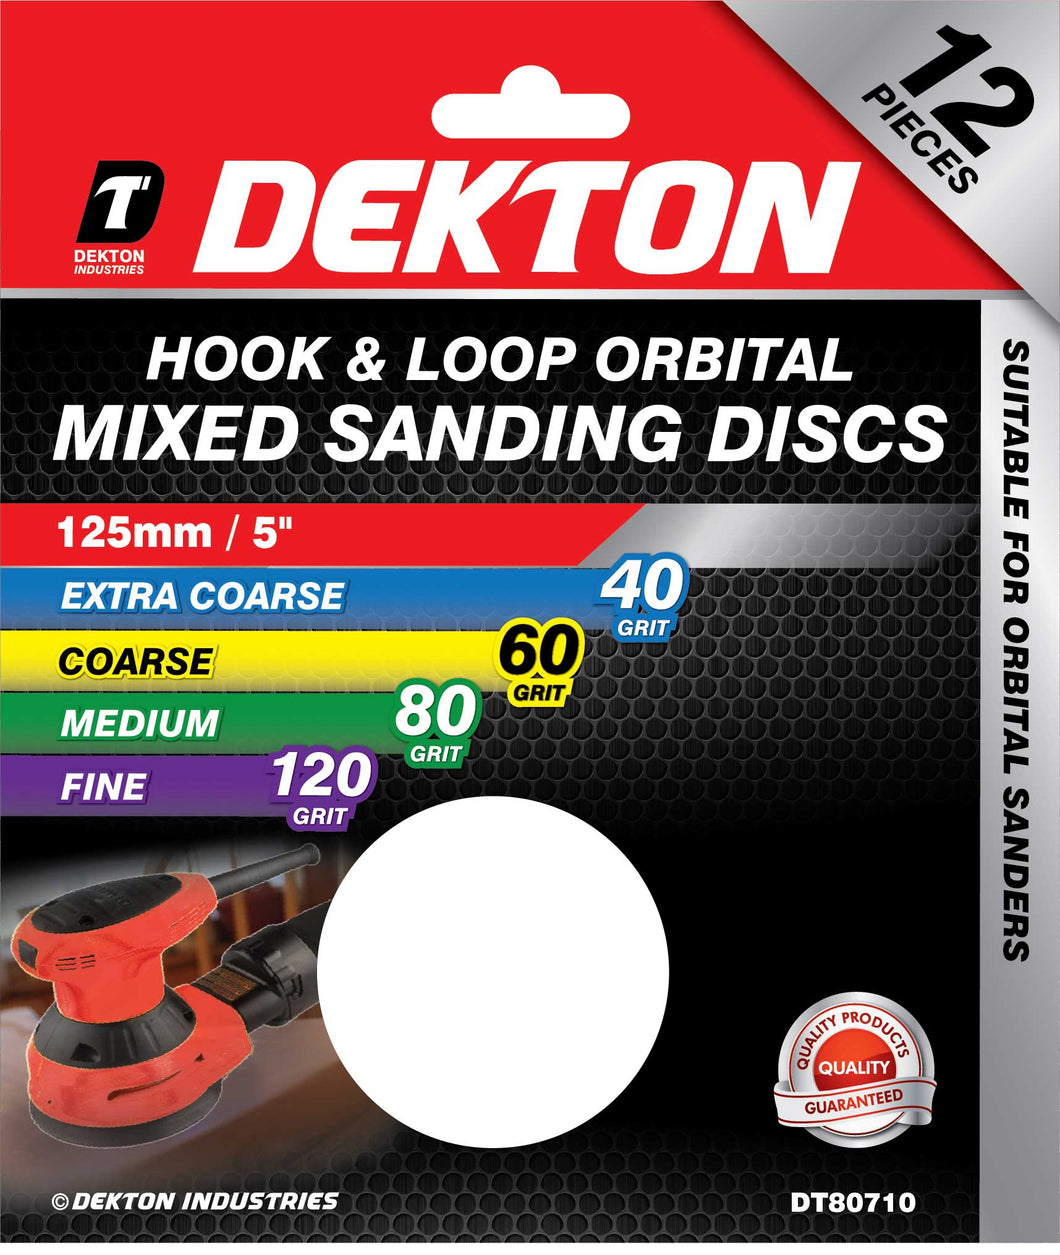 DEKTON HOOK & LOOP ORBITAL MIXED SANDING DISCS